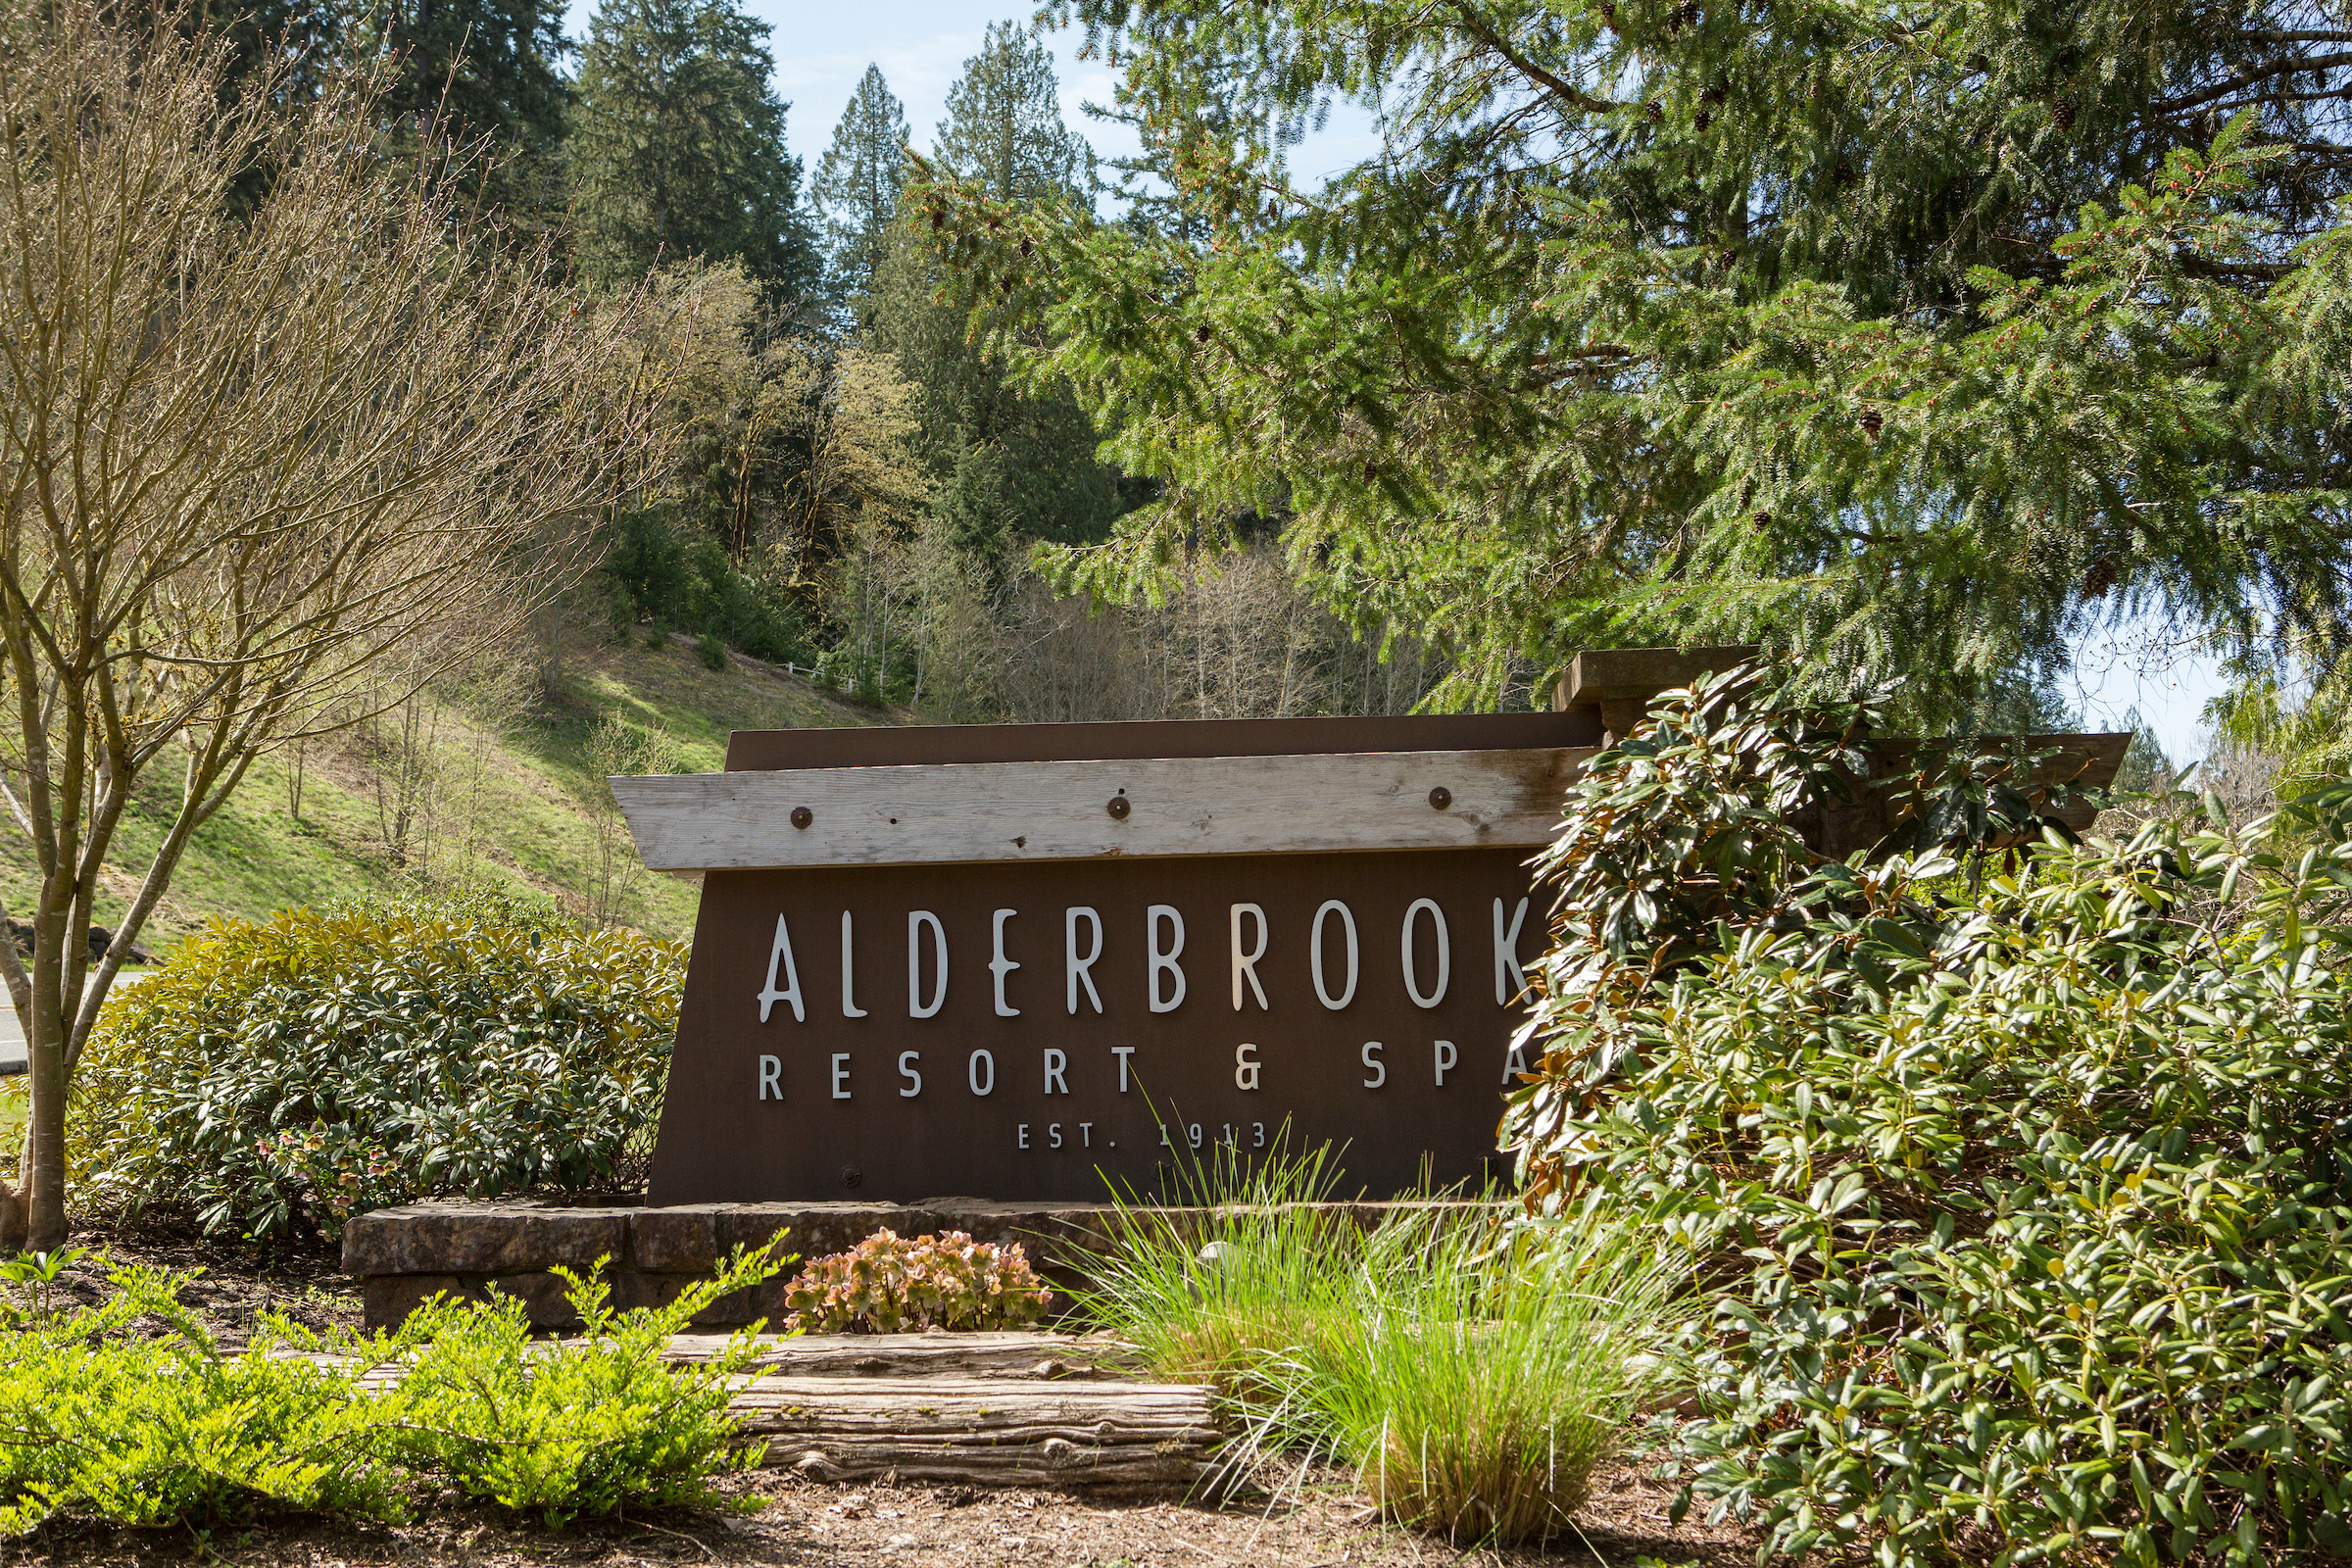 The entrance sign of the Alderbrook Resort & Spa